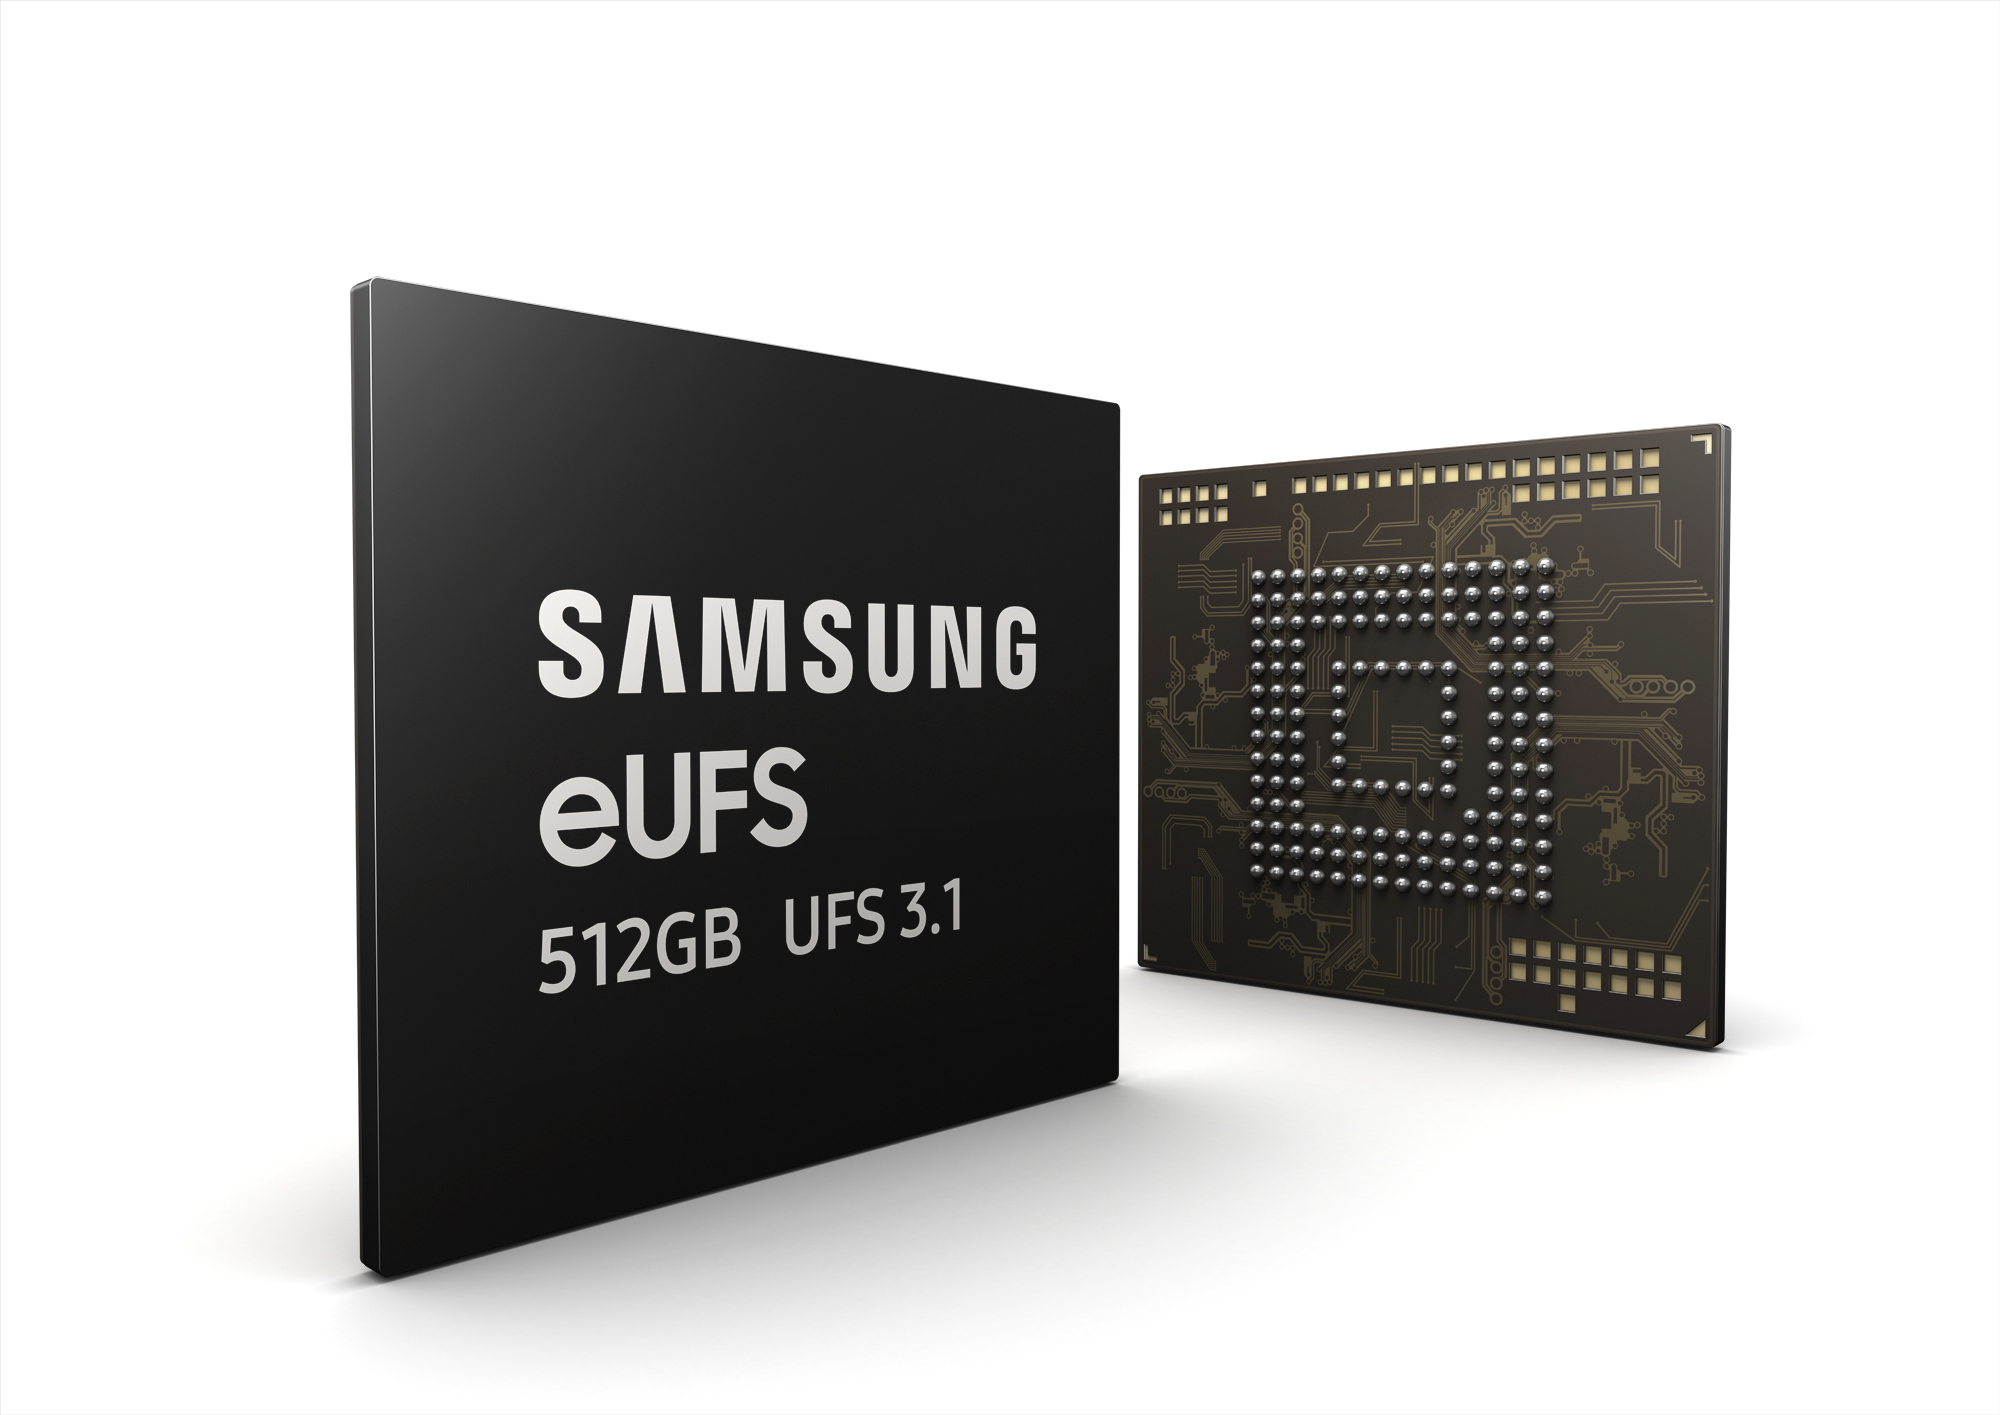 RFID  Samsung Semiconductor Global